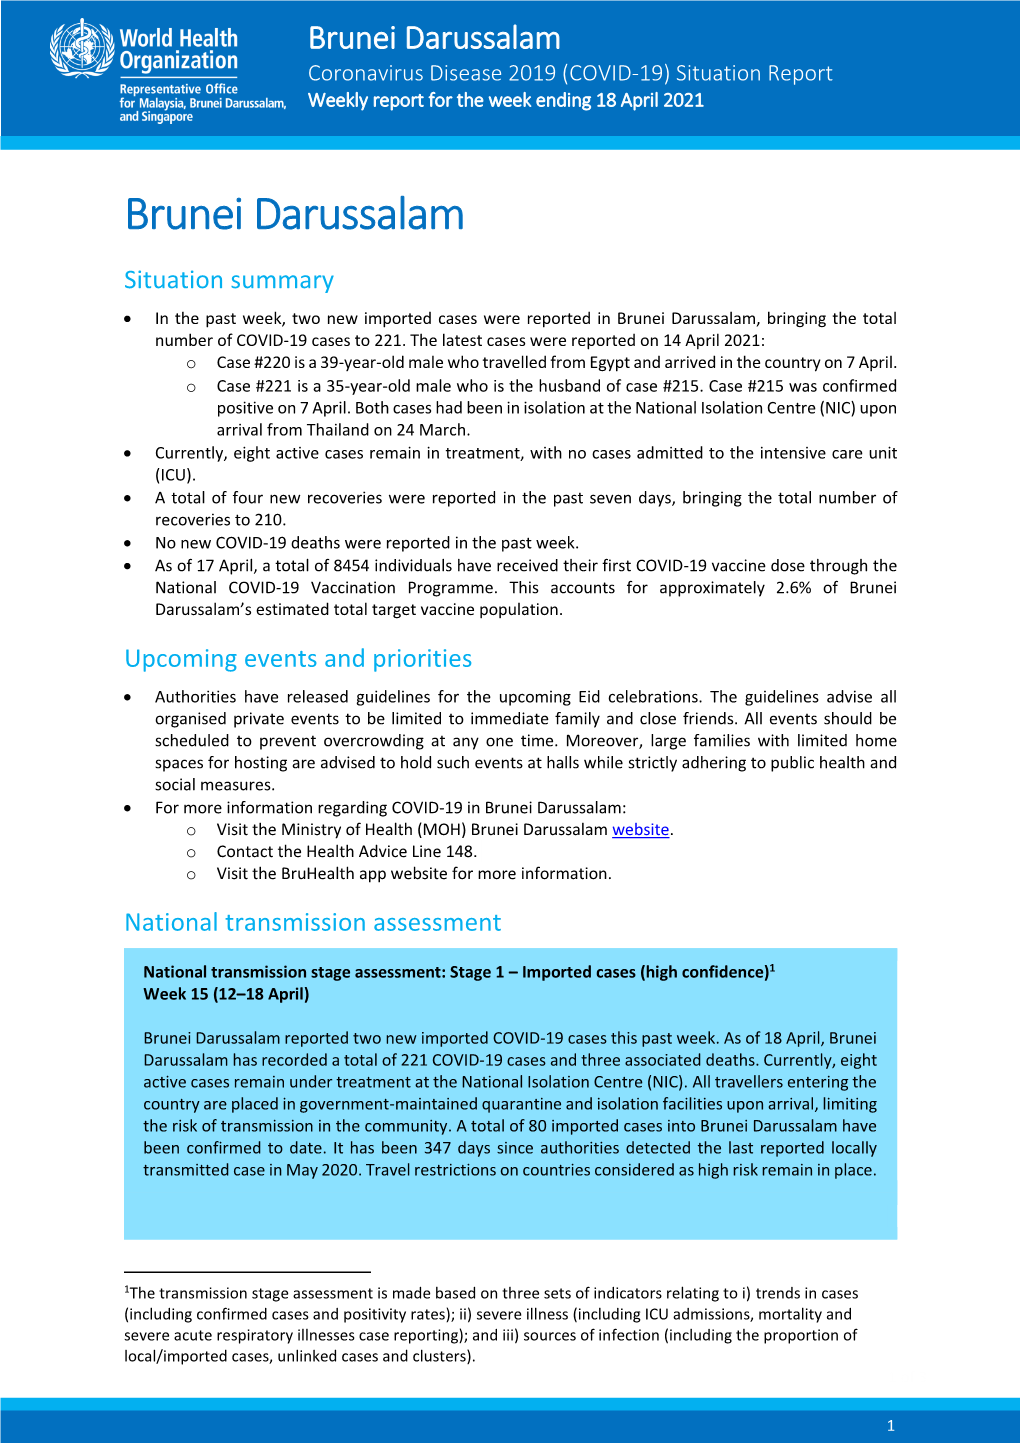 Brunei Darussalam Coronavirus Disease 2019 (COVID-19) Situation Report Weekly Report for the Week Ending 18 April 2021